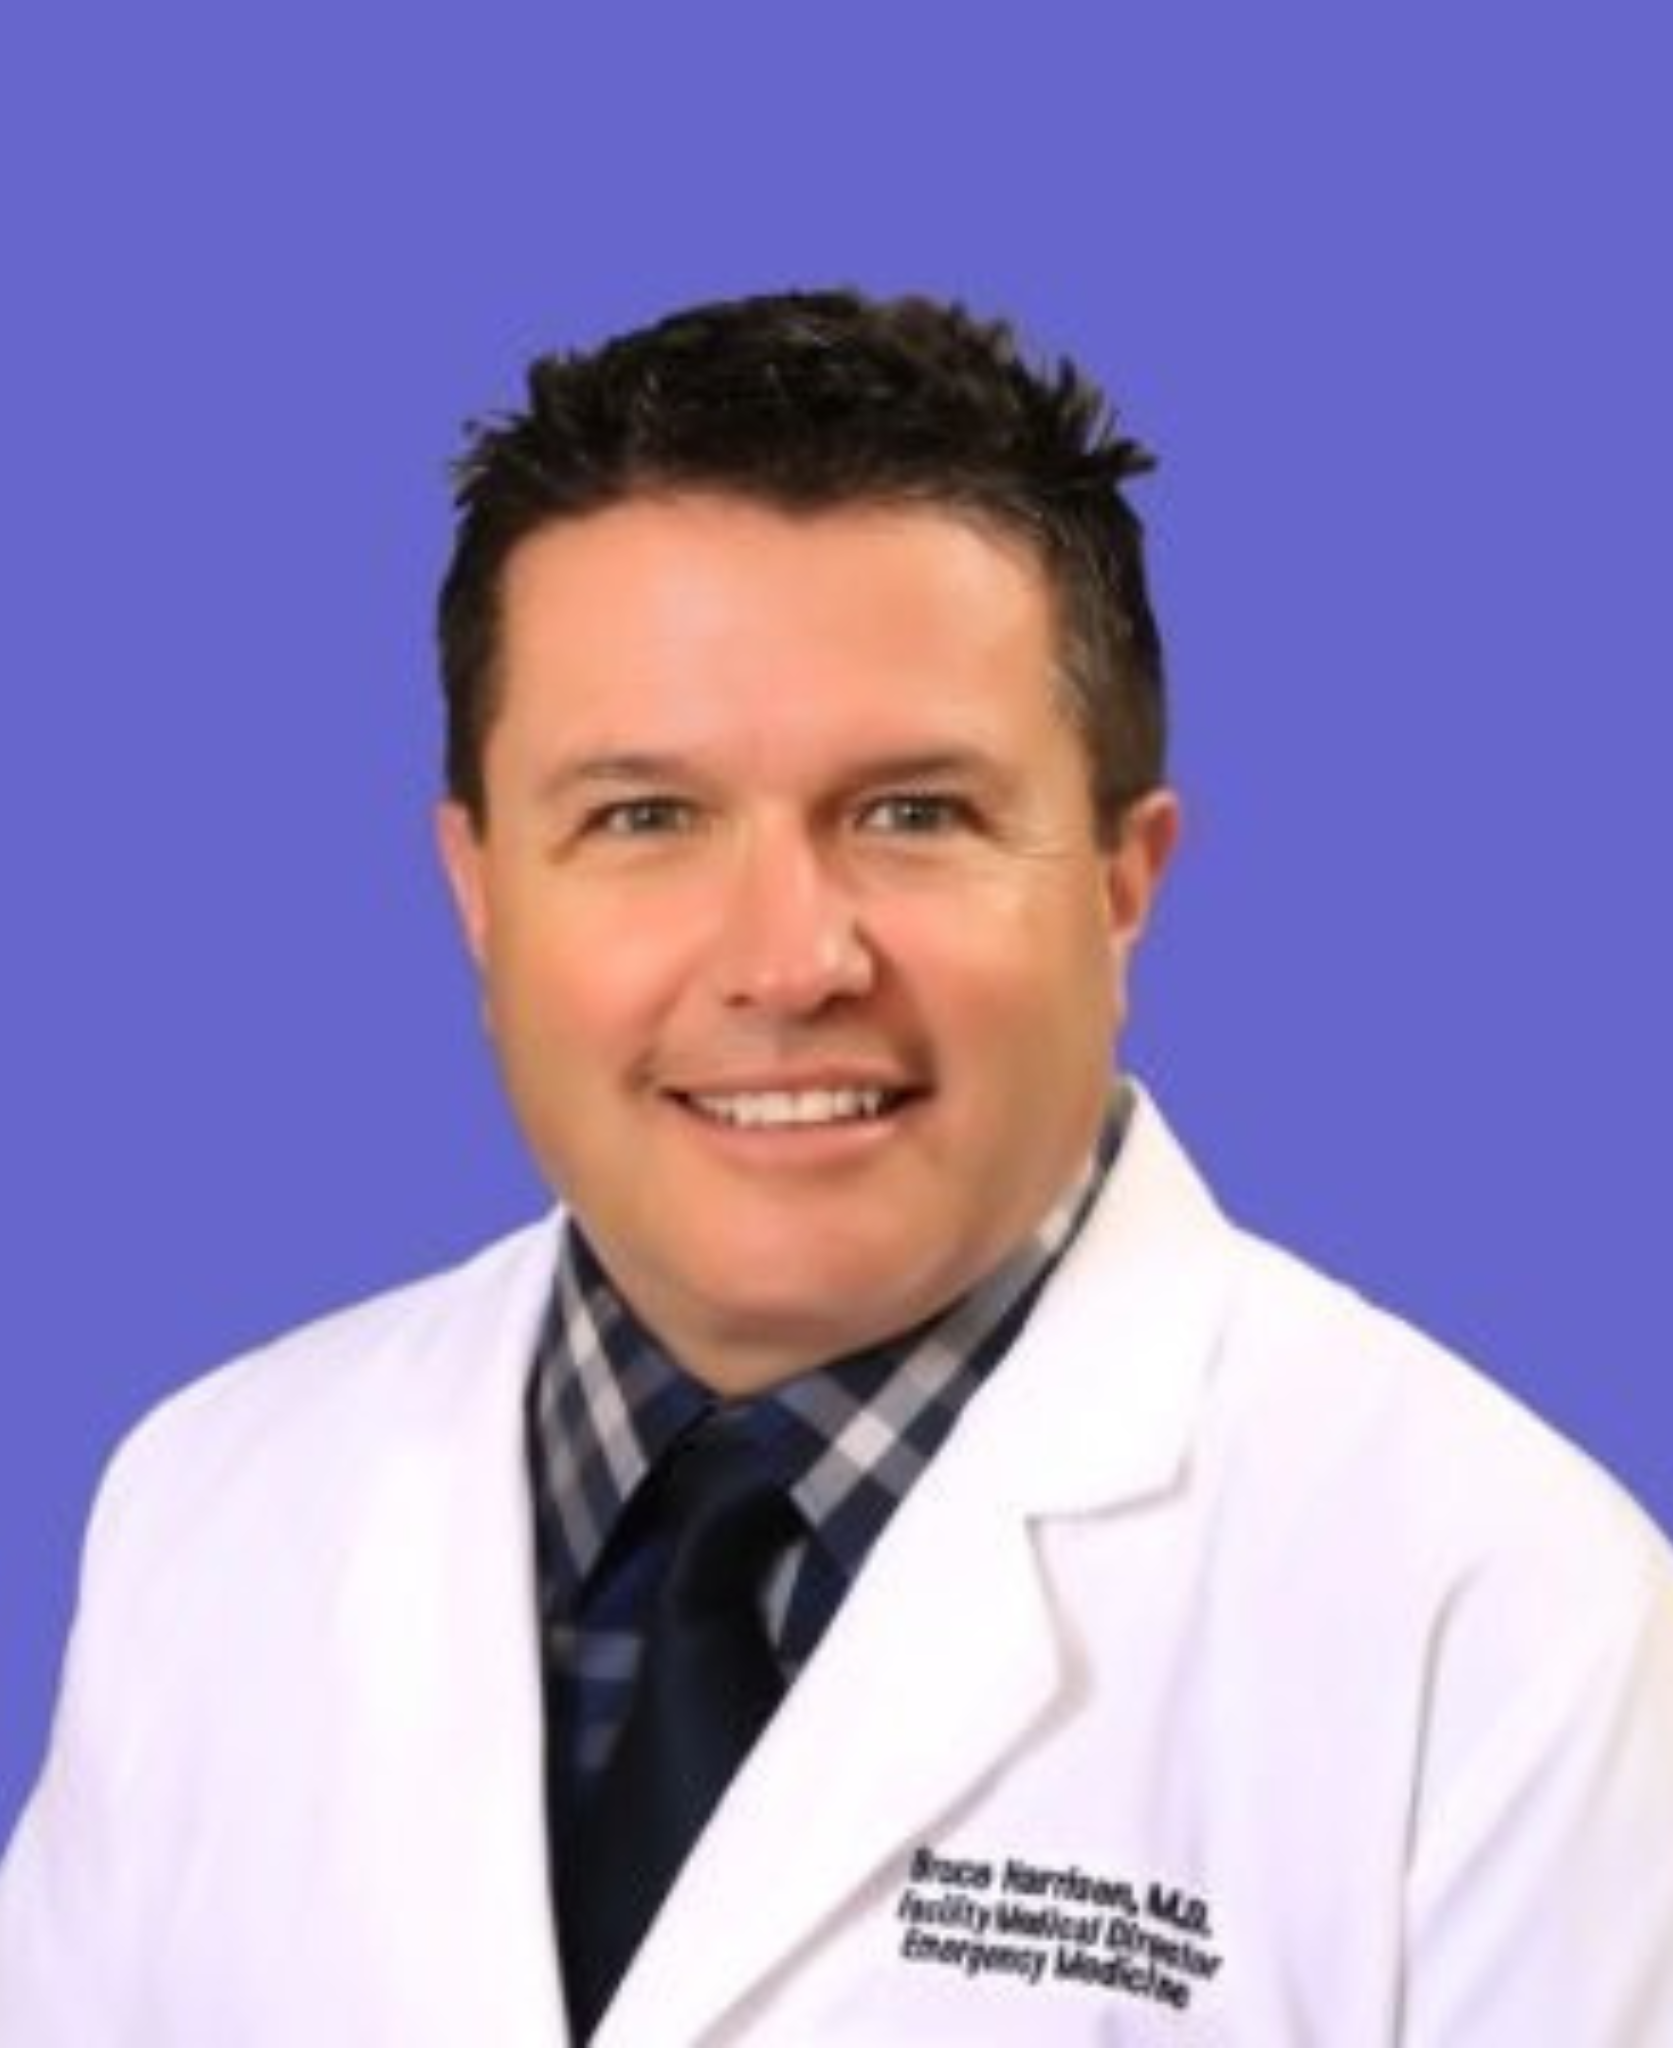 Dr. Bruce Harrison, MD